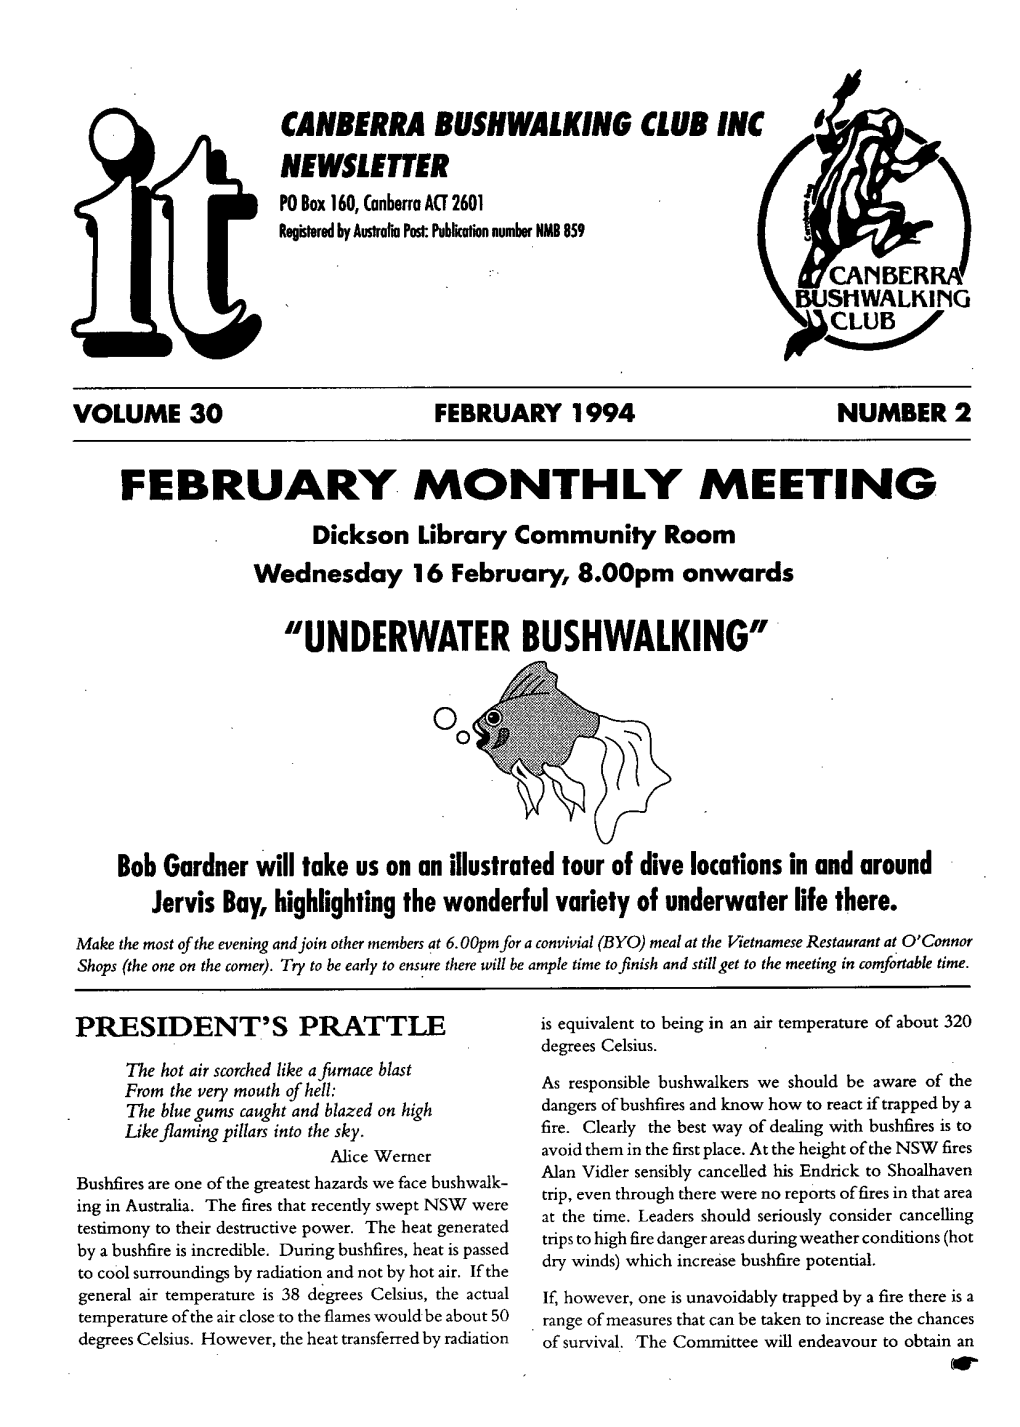 February Monthly Meeting "Underwater Bush Walking"